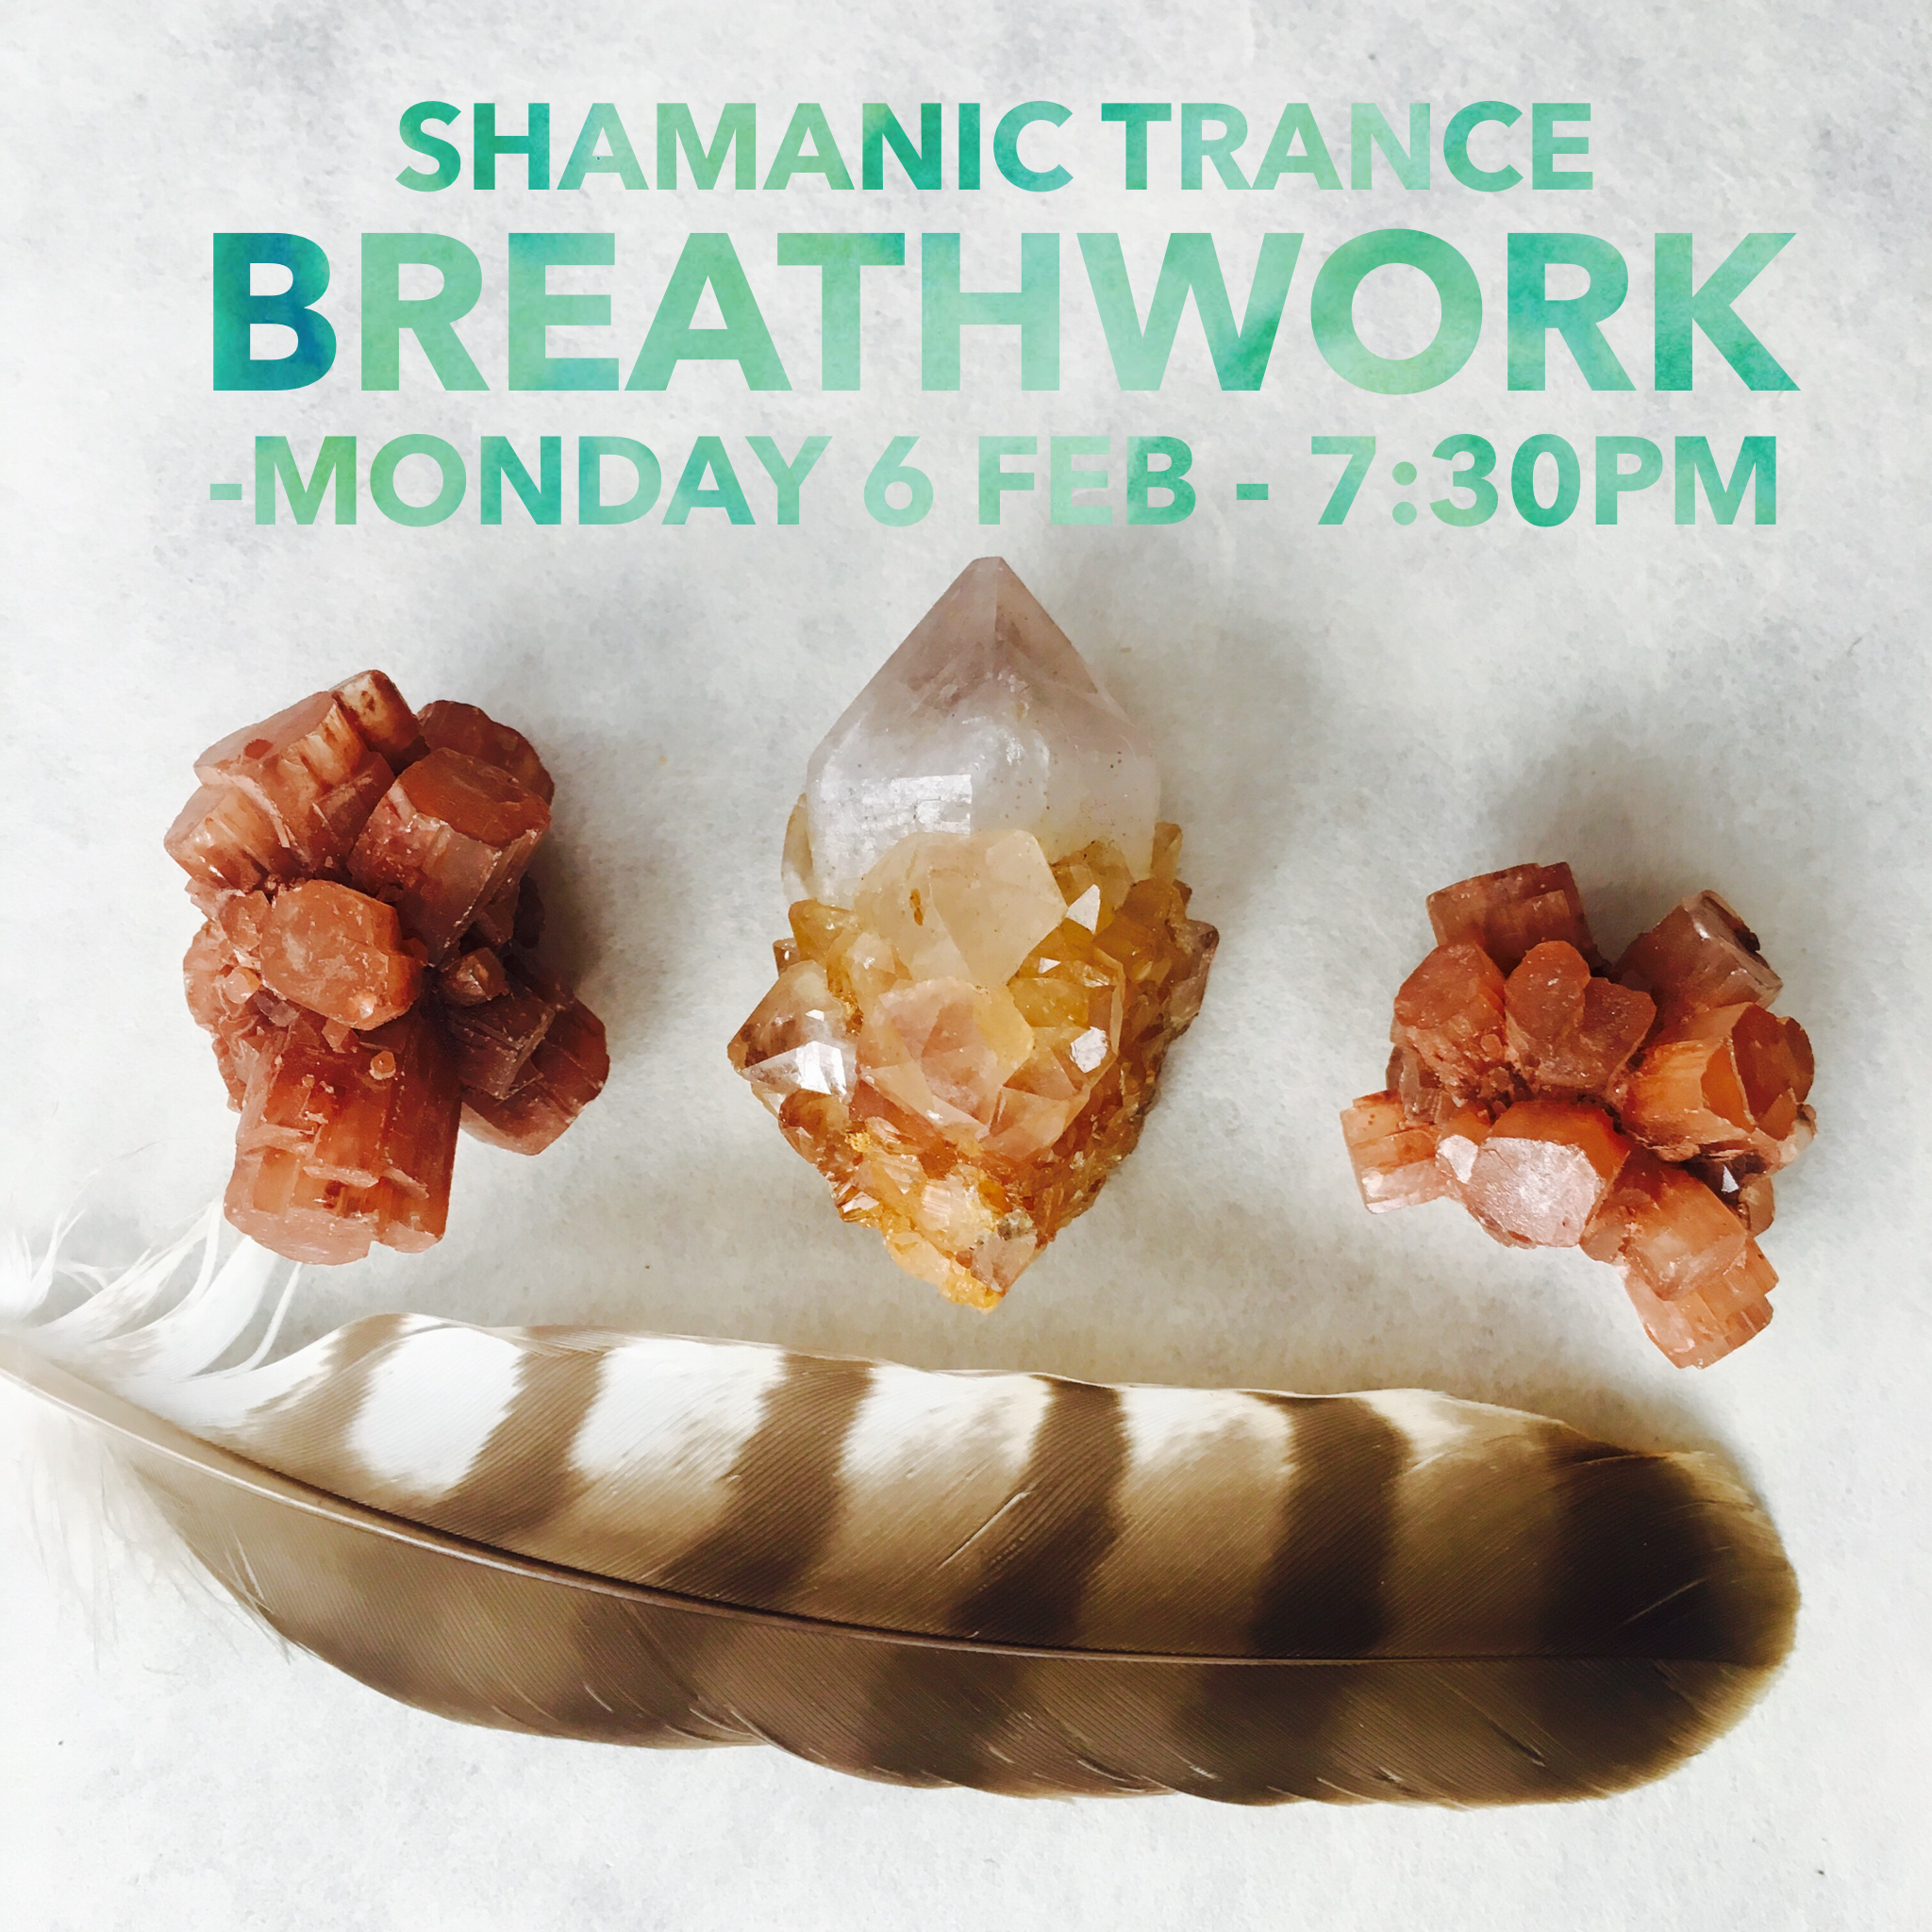 2/6/17 Shamanic Trance Breathwork Flier